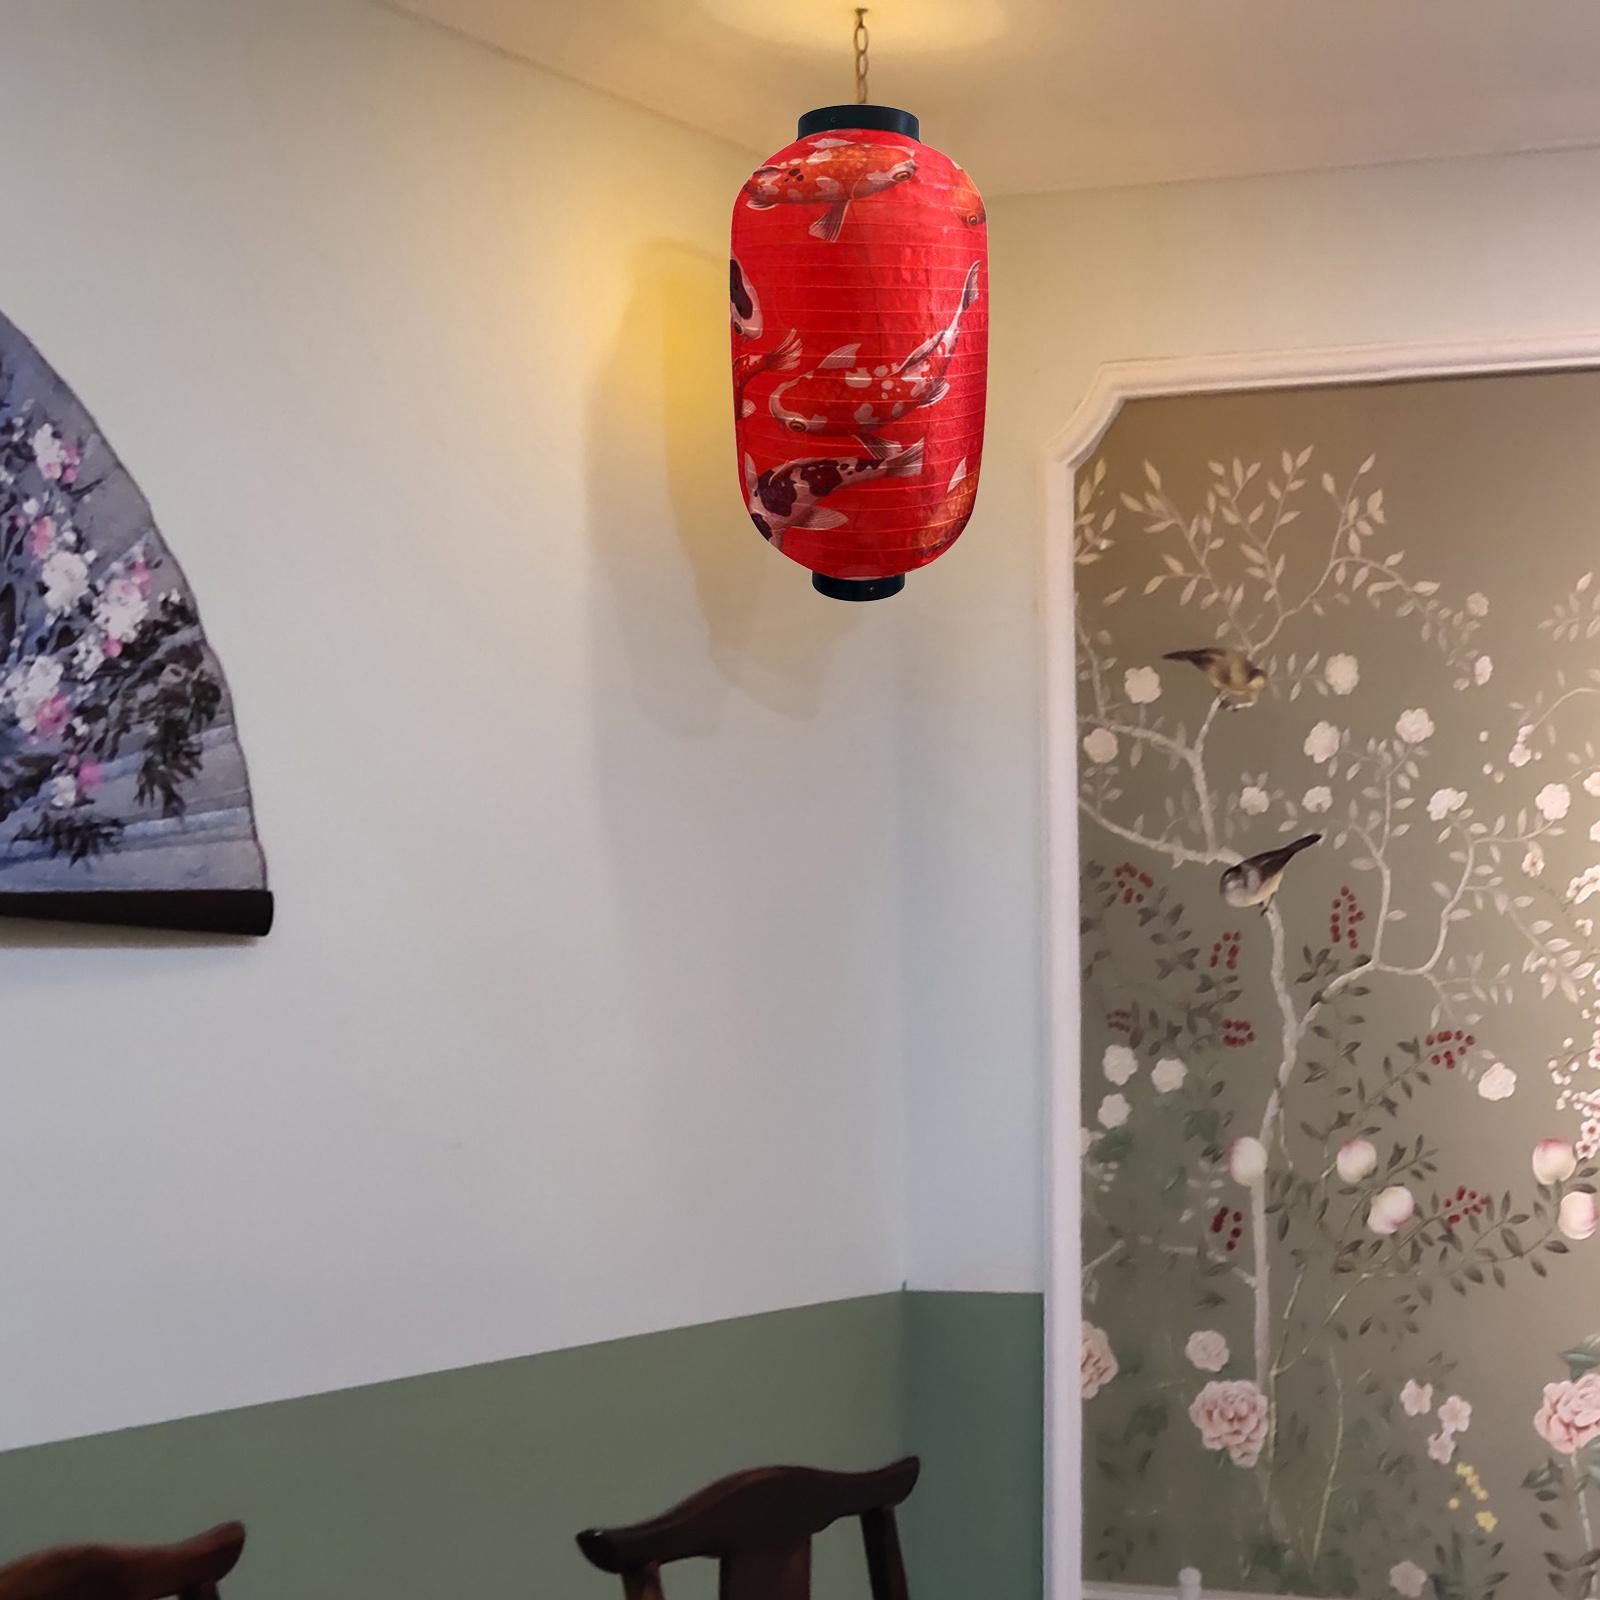 Lzakaya Restaurant Sign Lantern Japanese Bar Decorative Sushi Ramen Decor Red 20x35cm